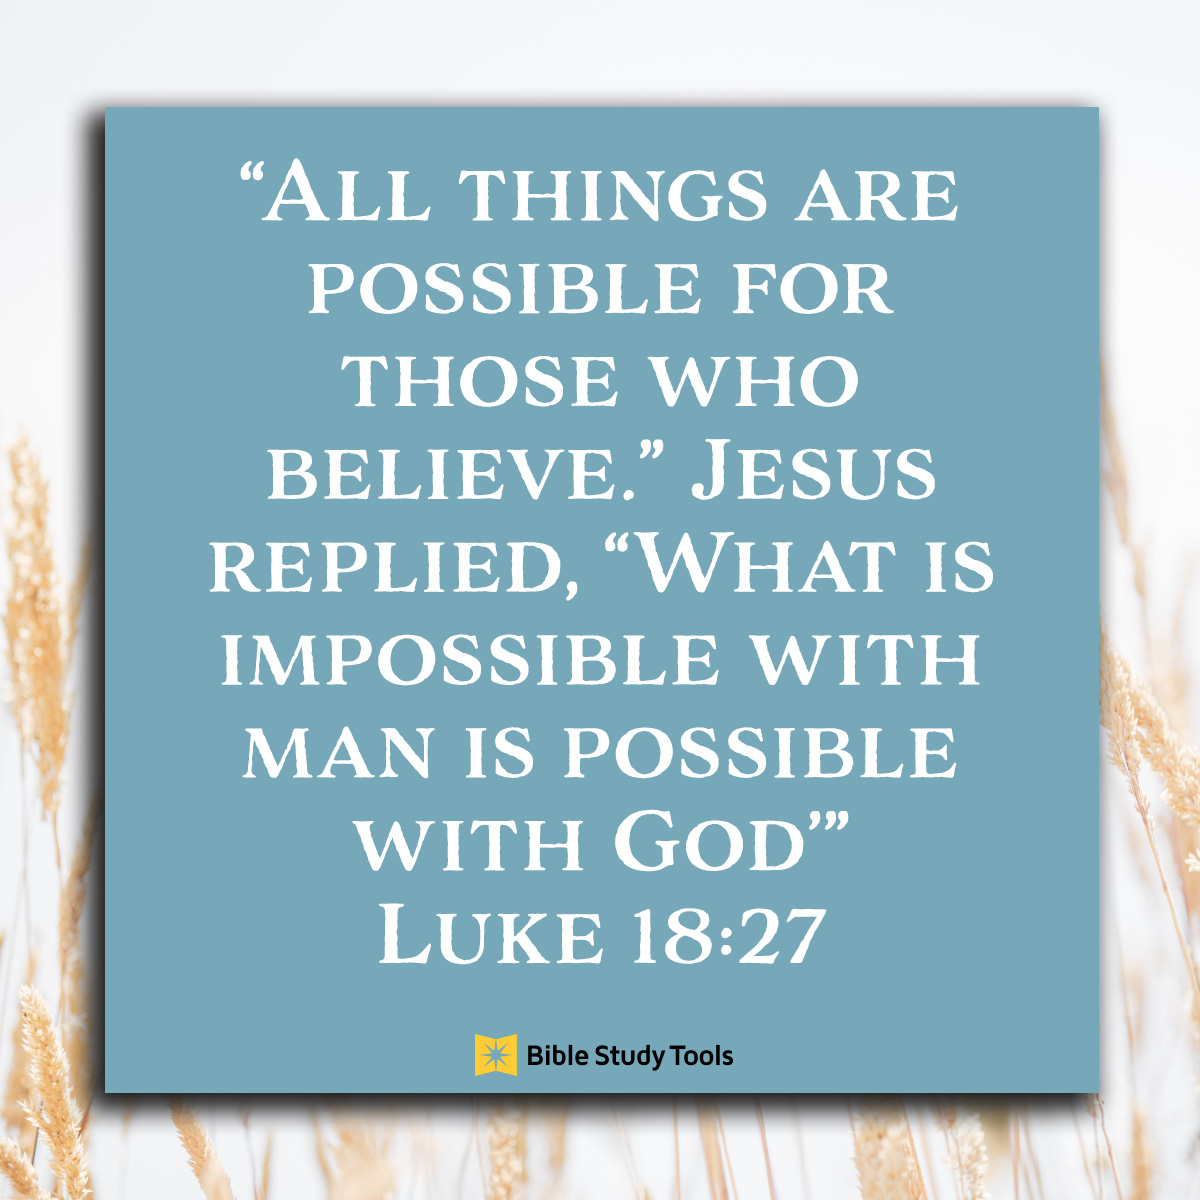 Luke 18:27, inspirational image